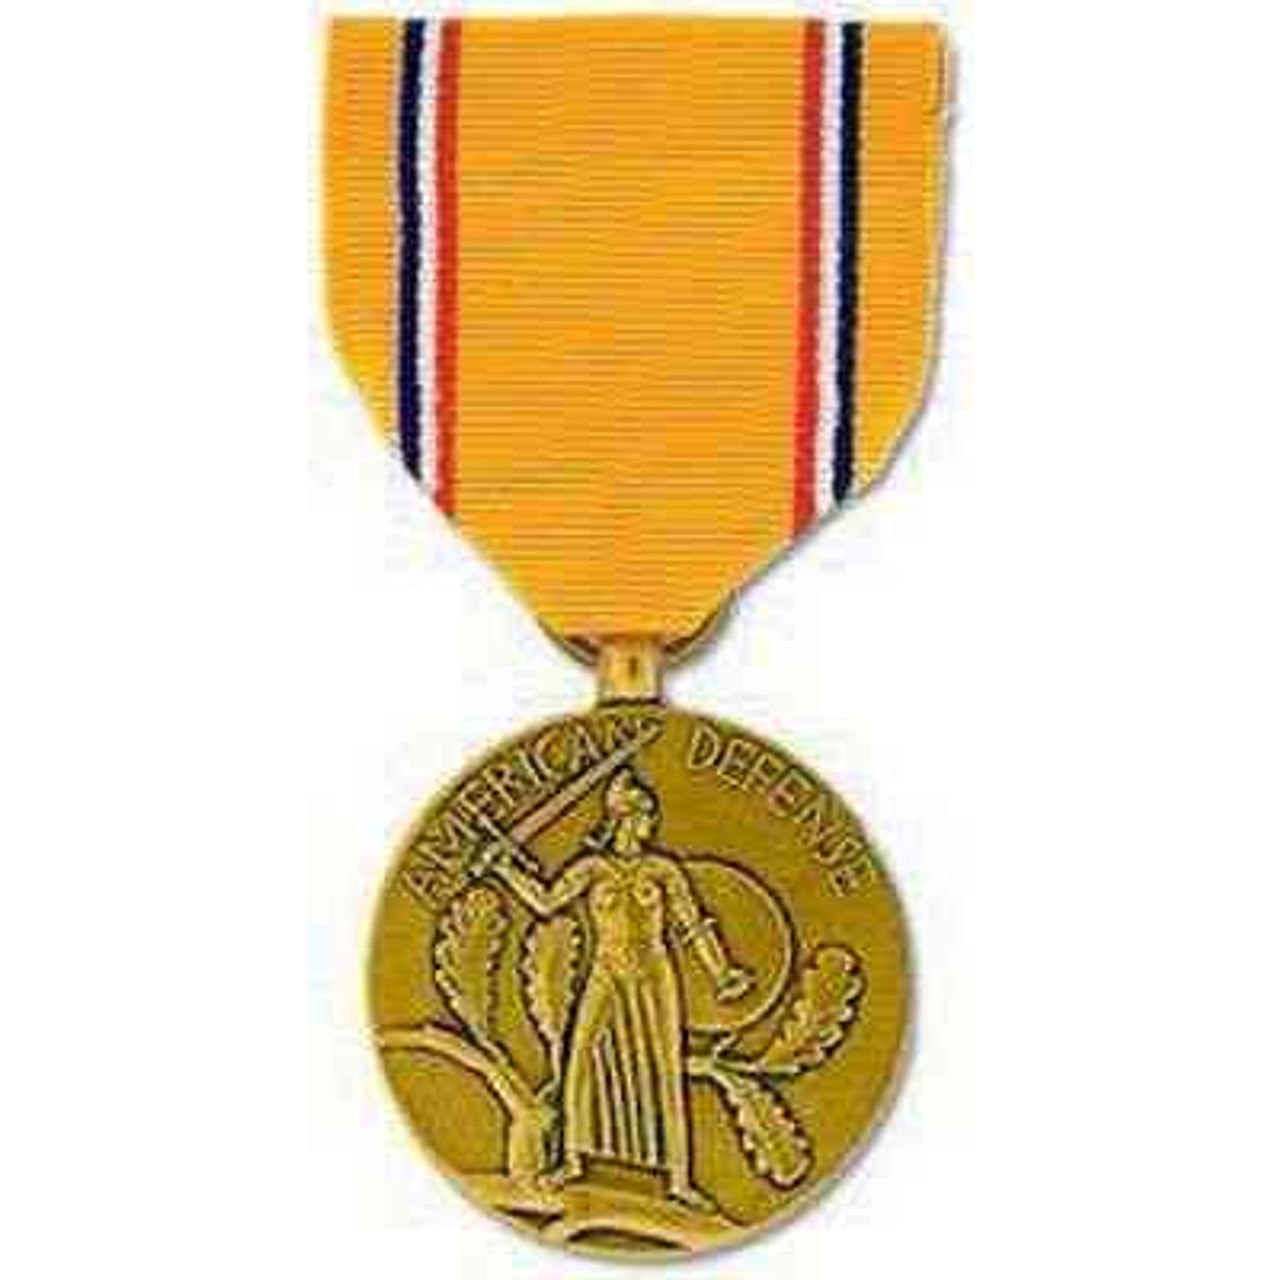 american defense service medal